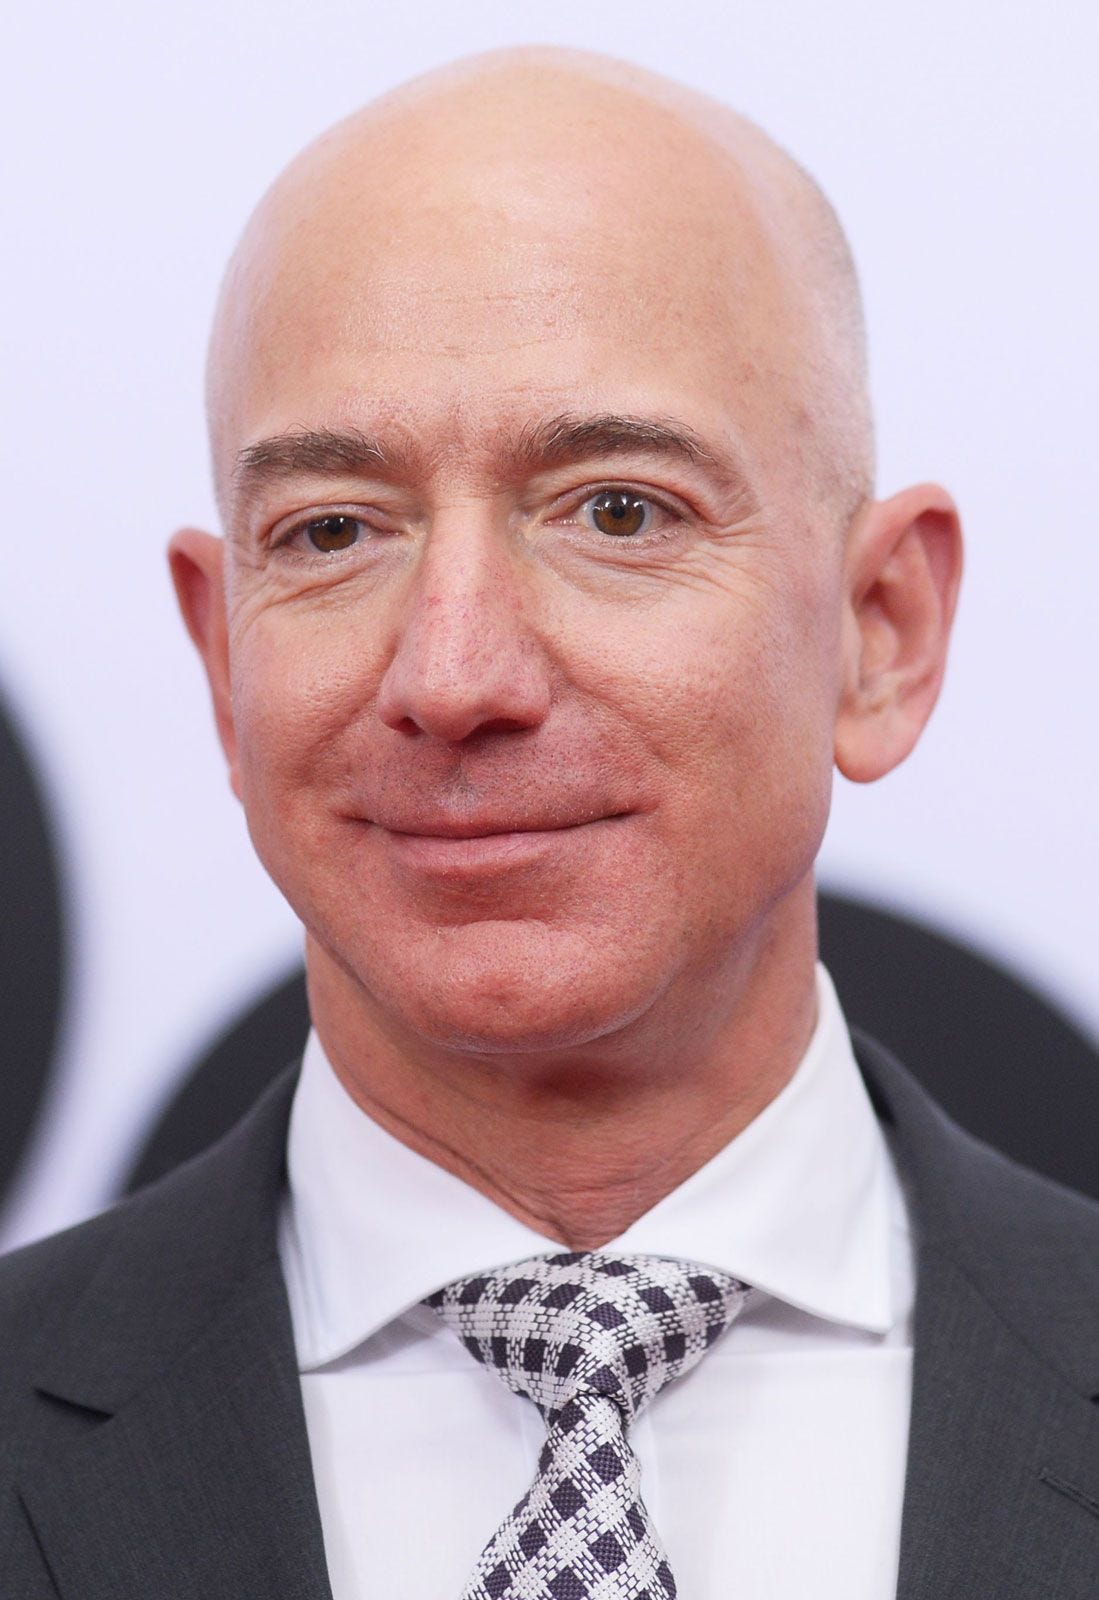 Jeff Bezos | Biography & Facts | Britannica